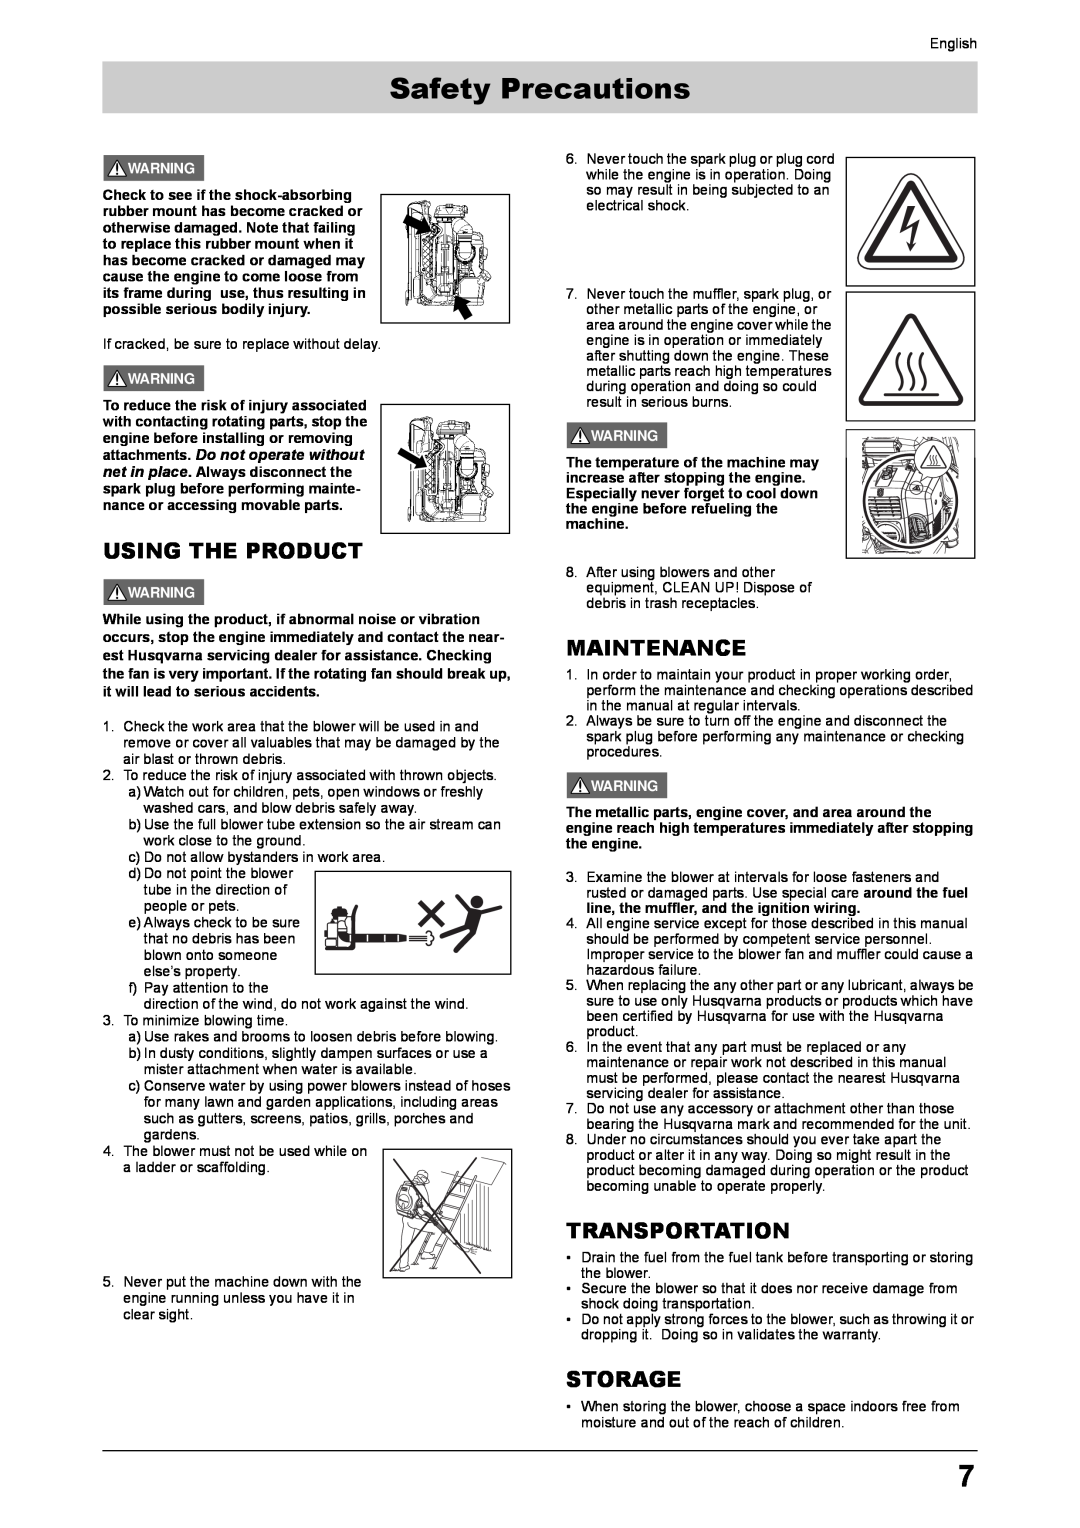 Husqvarna 170BT manual Using The Product, Maintenance, Transportation, Storage, Safety Precautions 